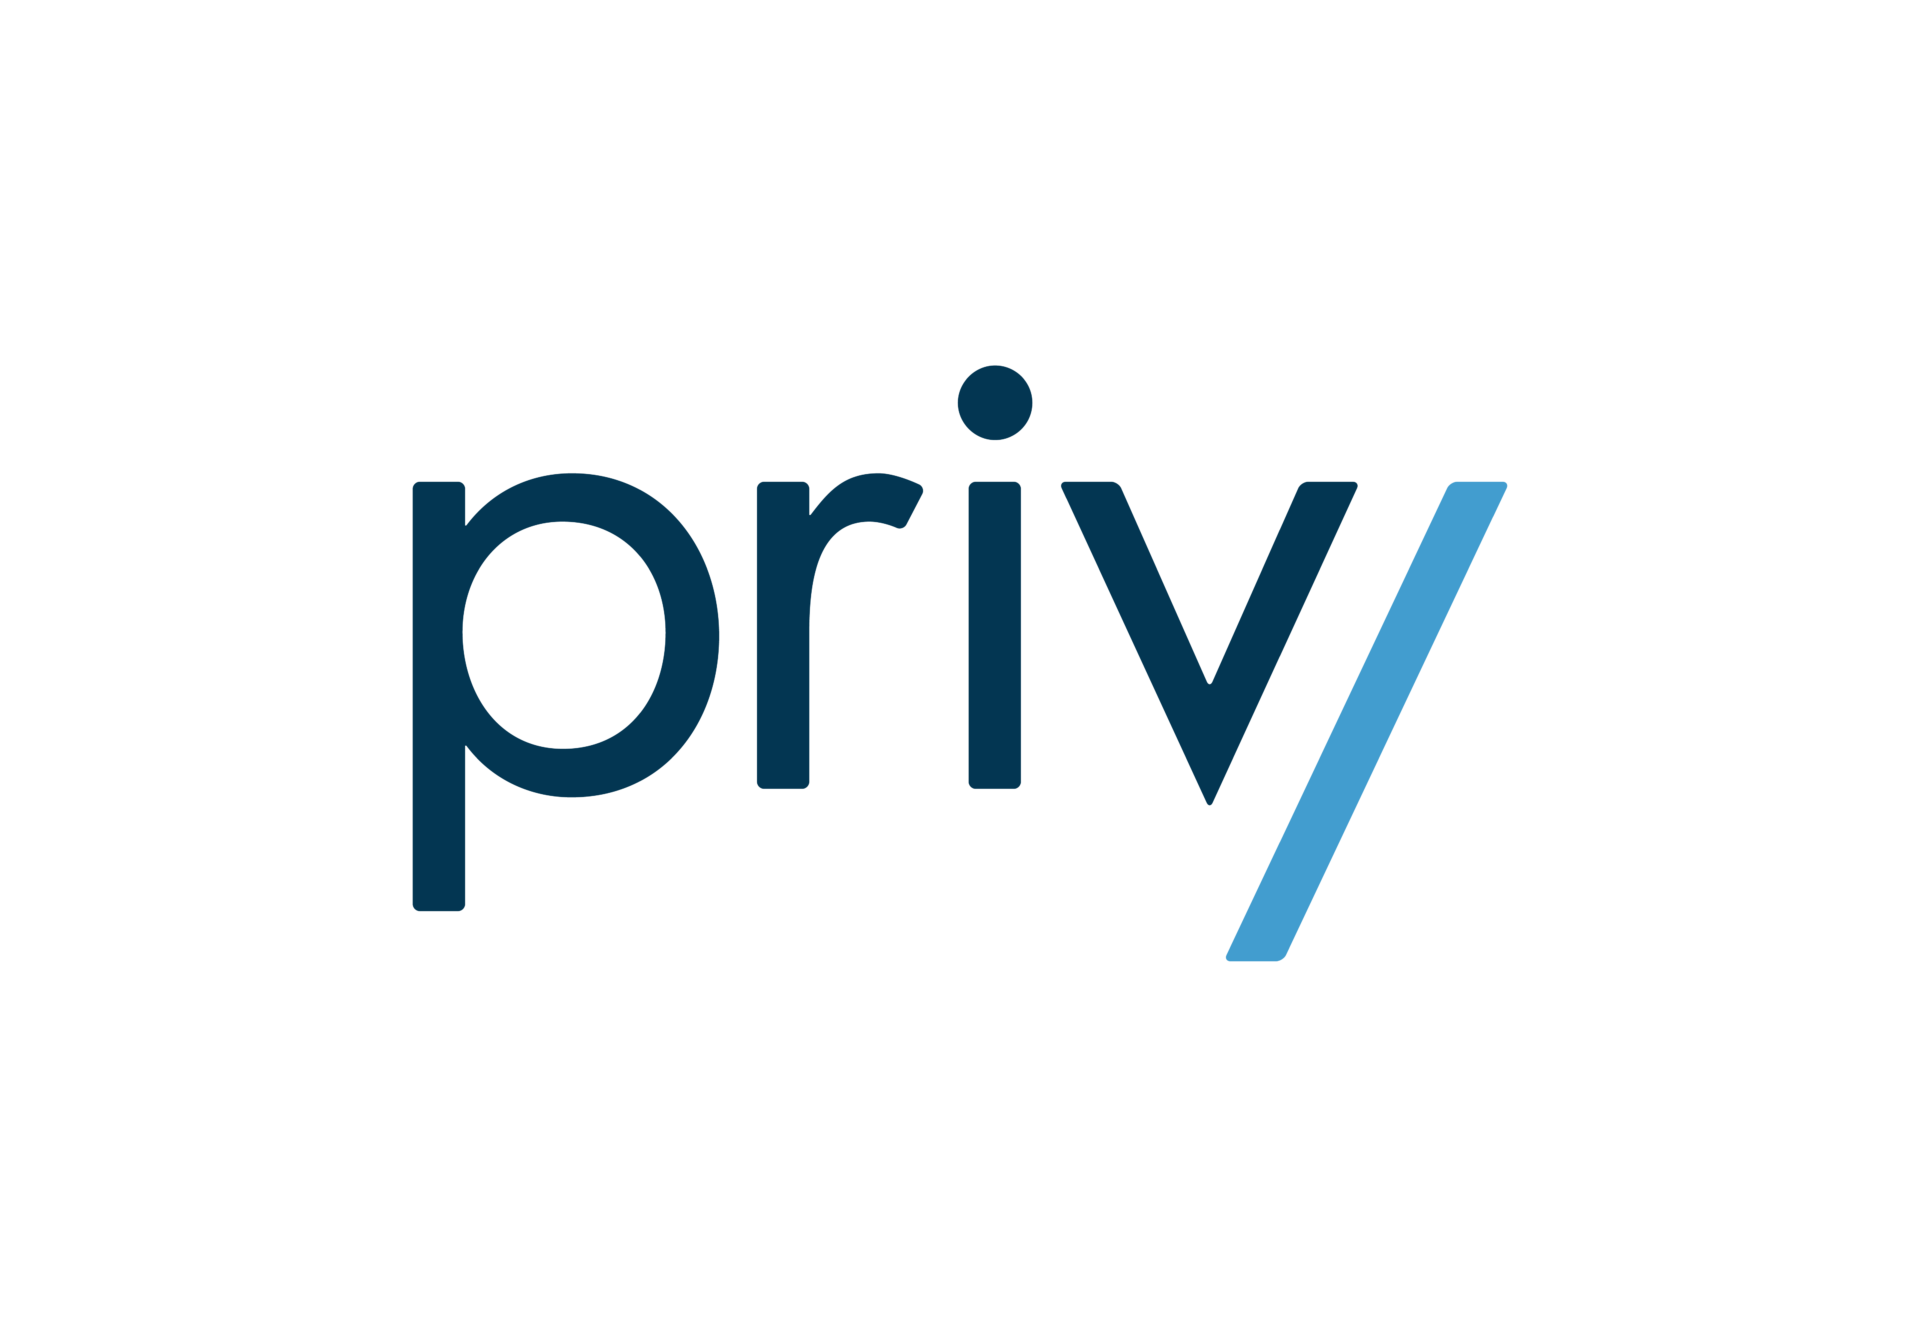 Privy Real Estate Investing Software (Privy)